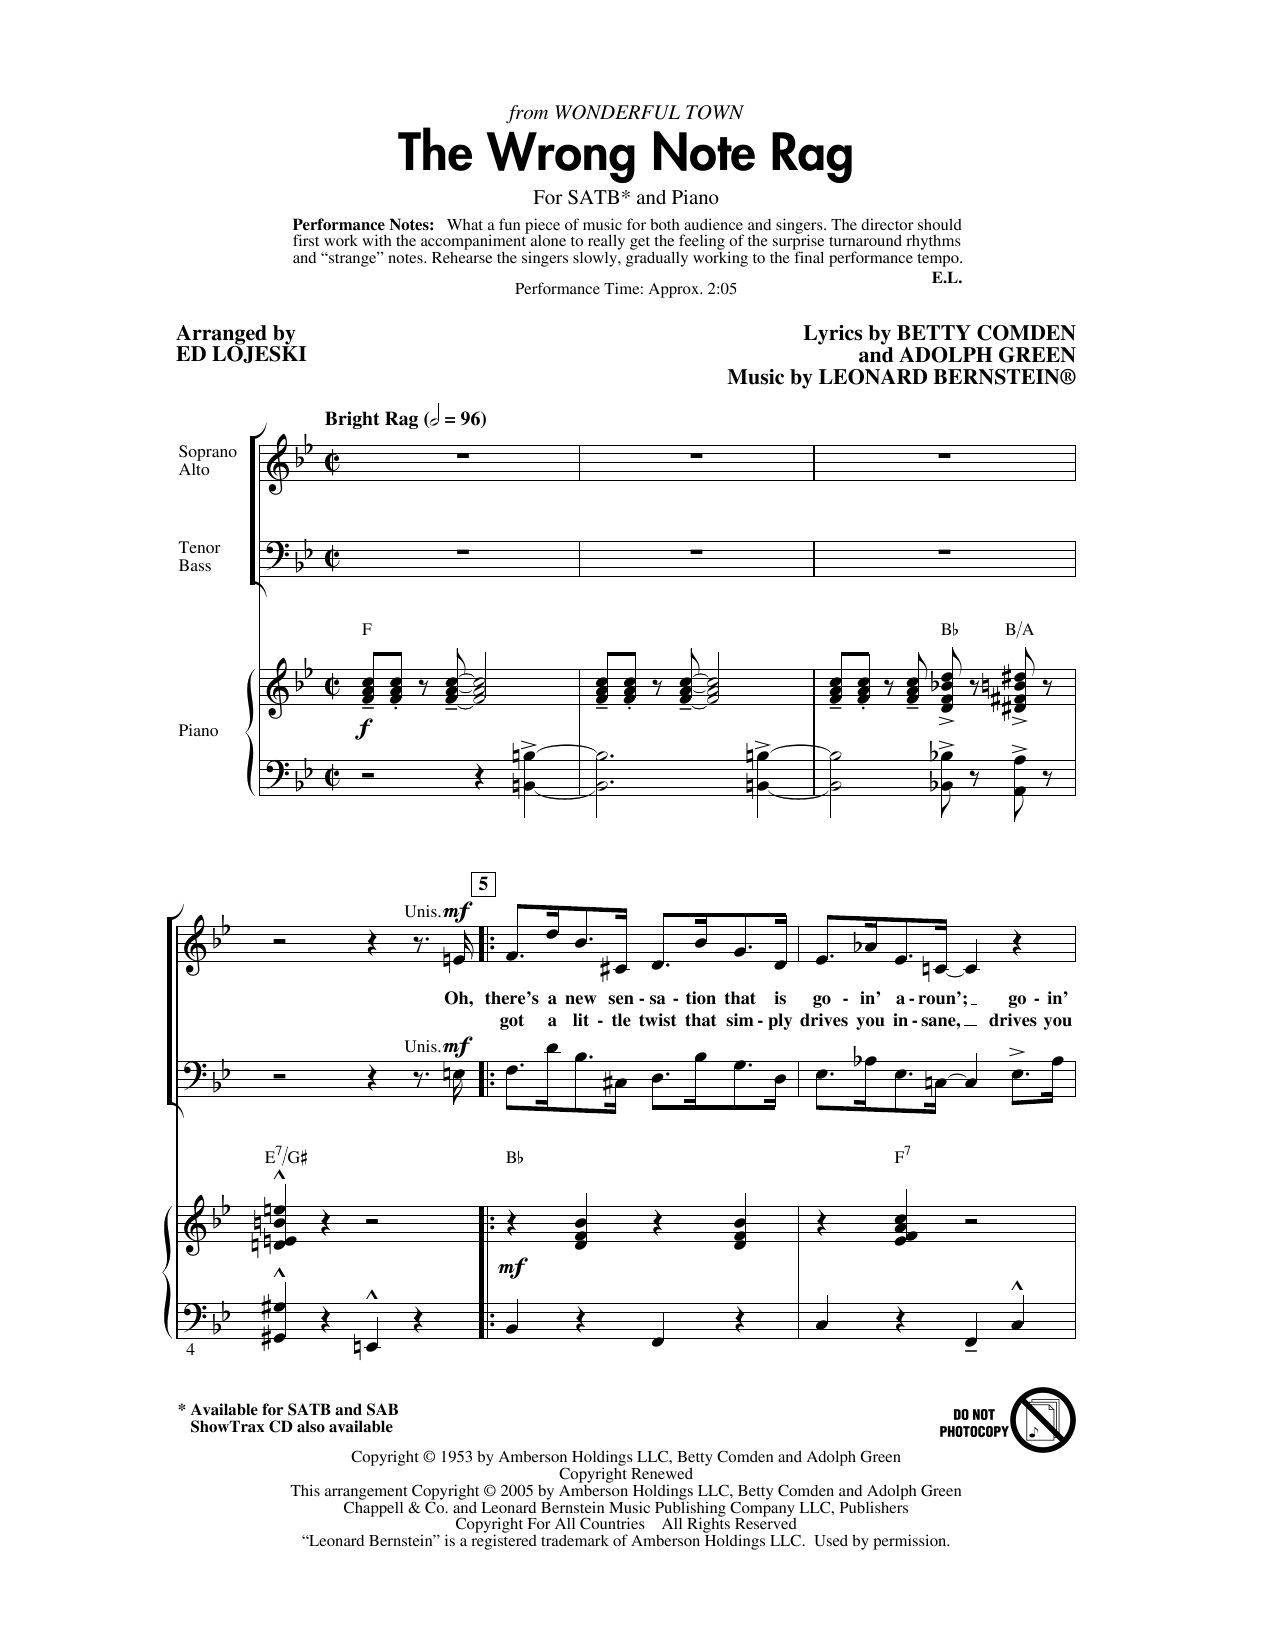 Leonard Bernstein The Wrong Note Rag (from Wonderful Town) (arr. Ed Lojeski) Sheet Music Notes & Chords for SAB Choir - Download or Print PDF